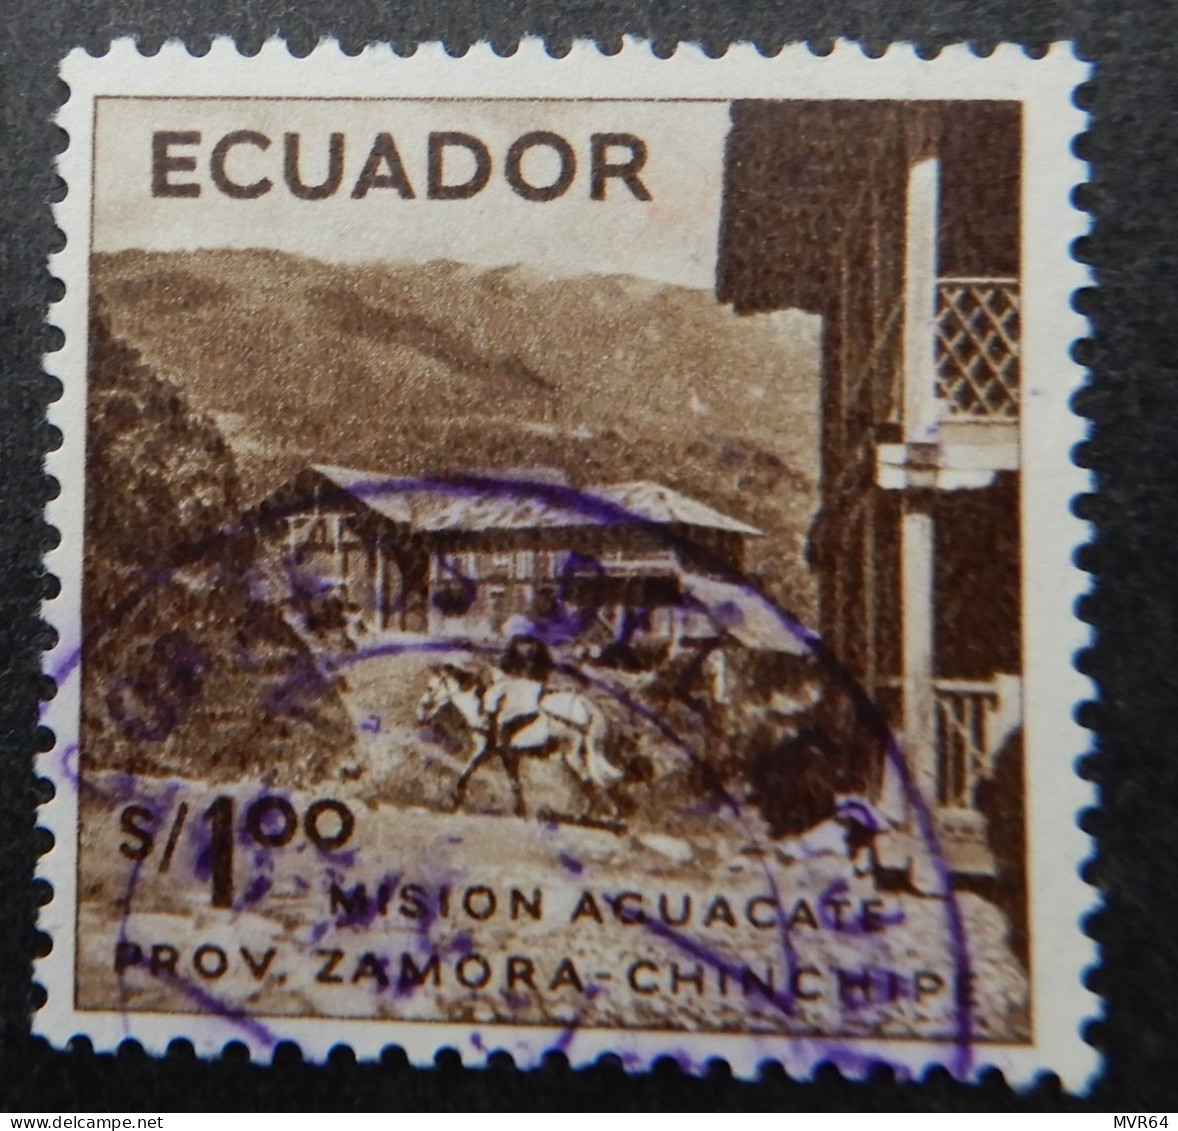 Ecuador 1955 (2b) Mision Acuacate - Ecuador